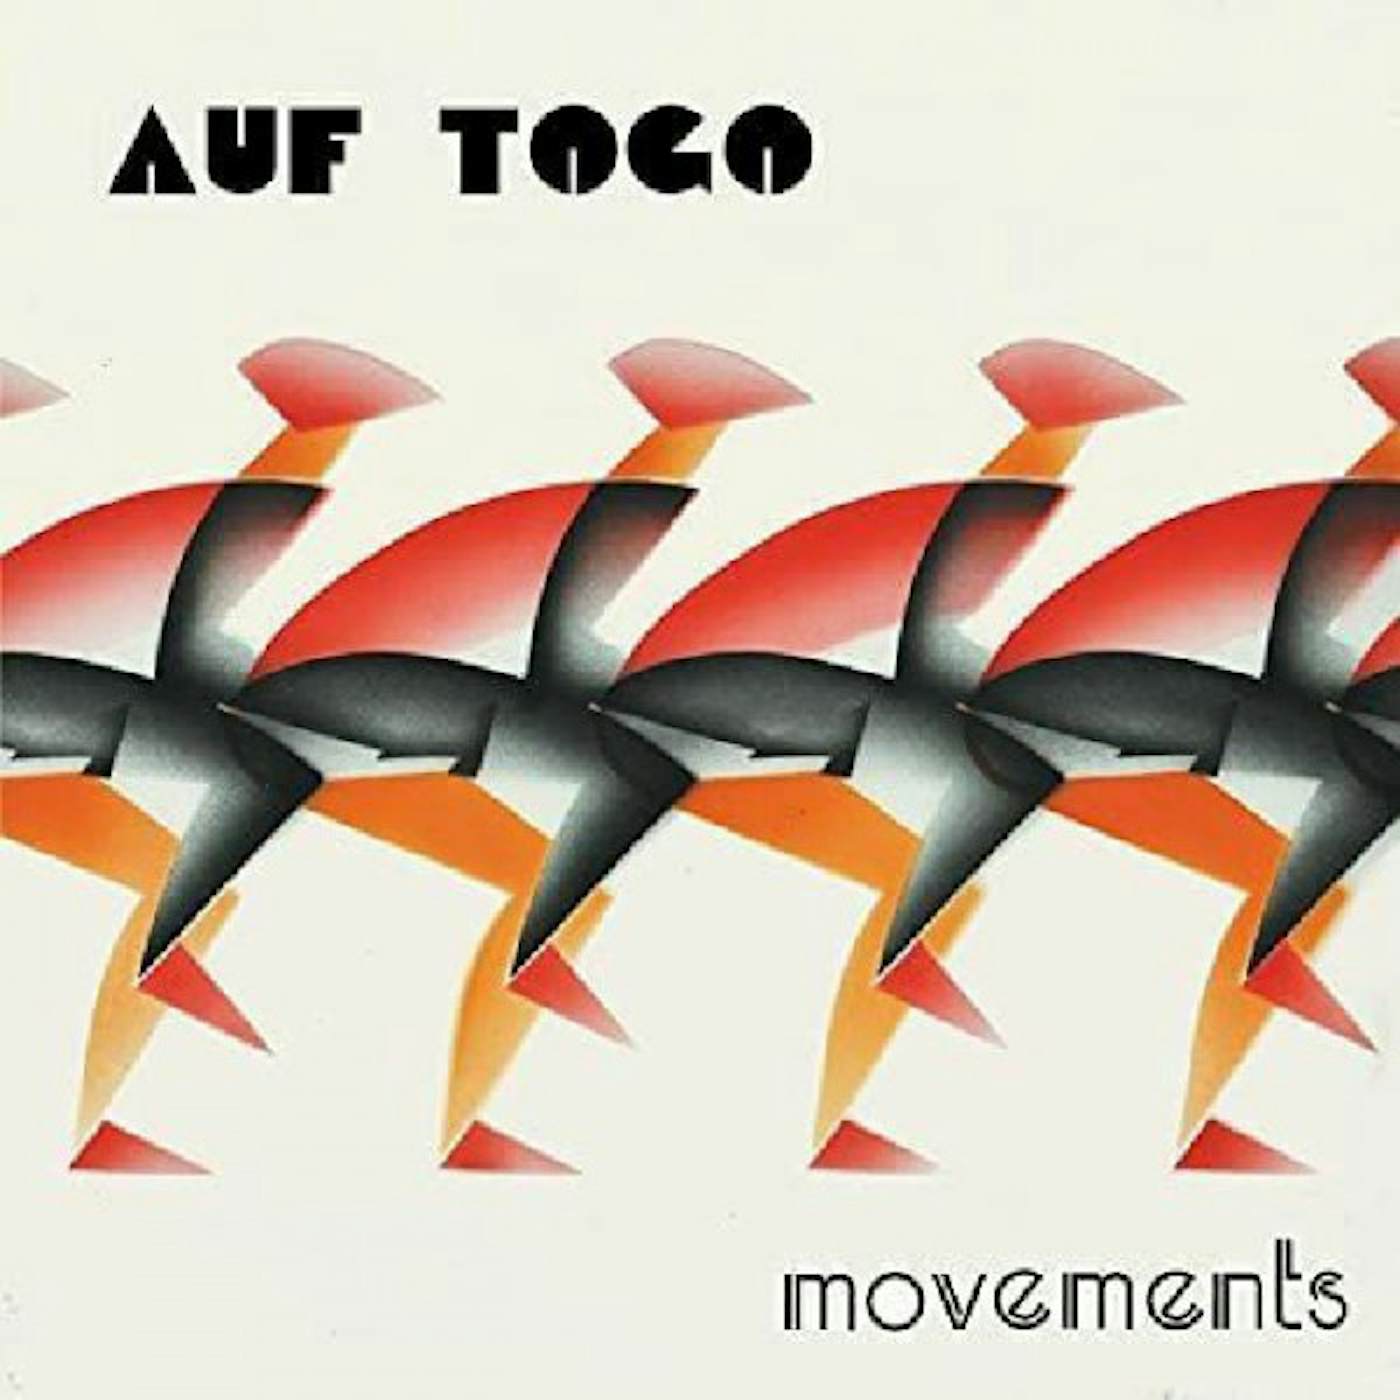 Auf Togo MOVEMENTS Vinyl Record